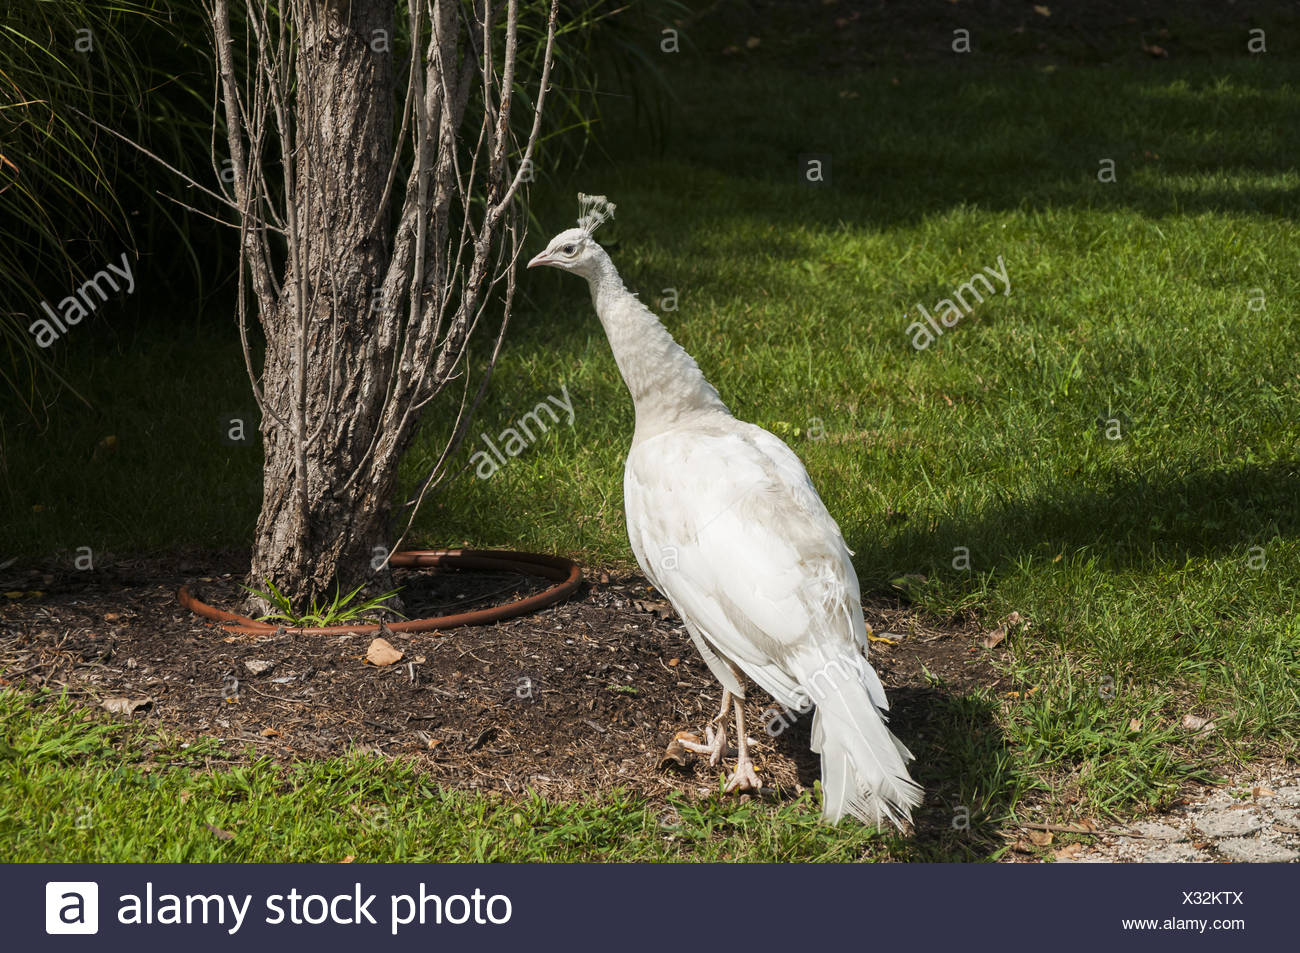 Female White Peacock Stock Photo Alamy